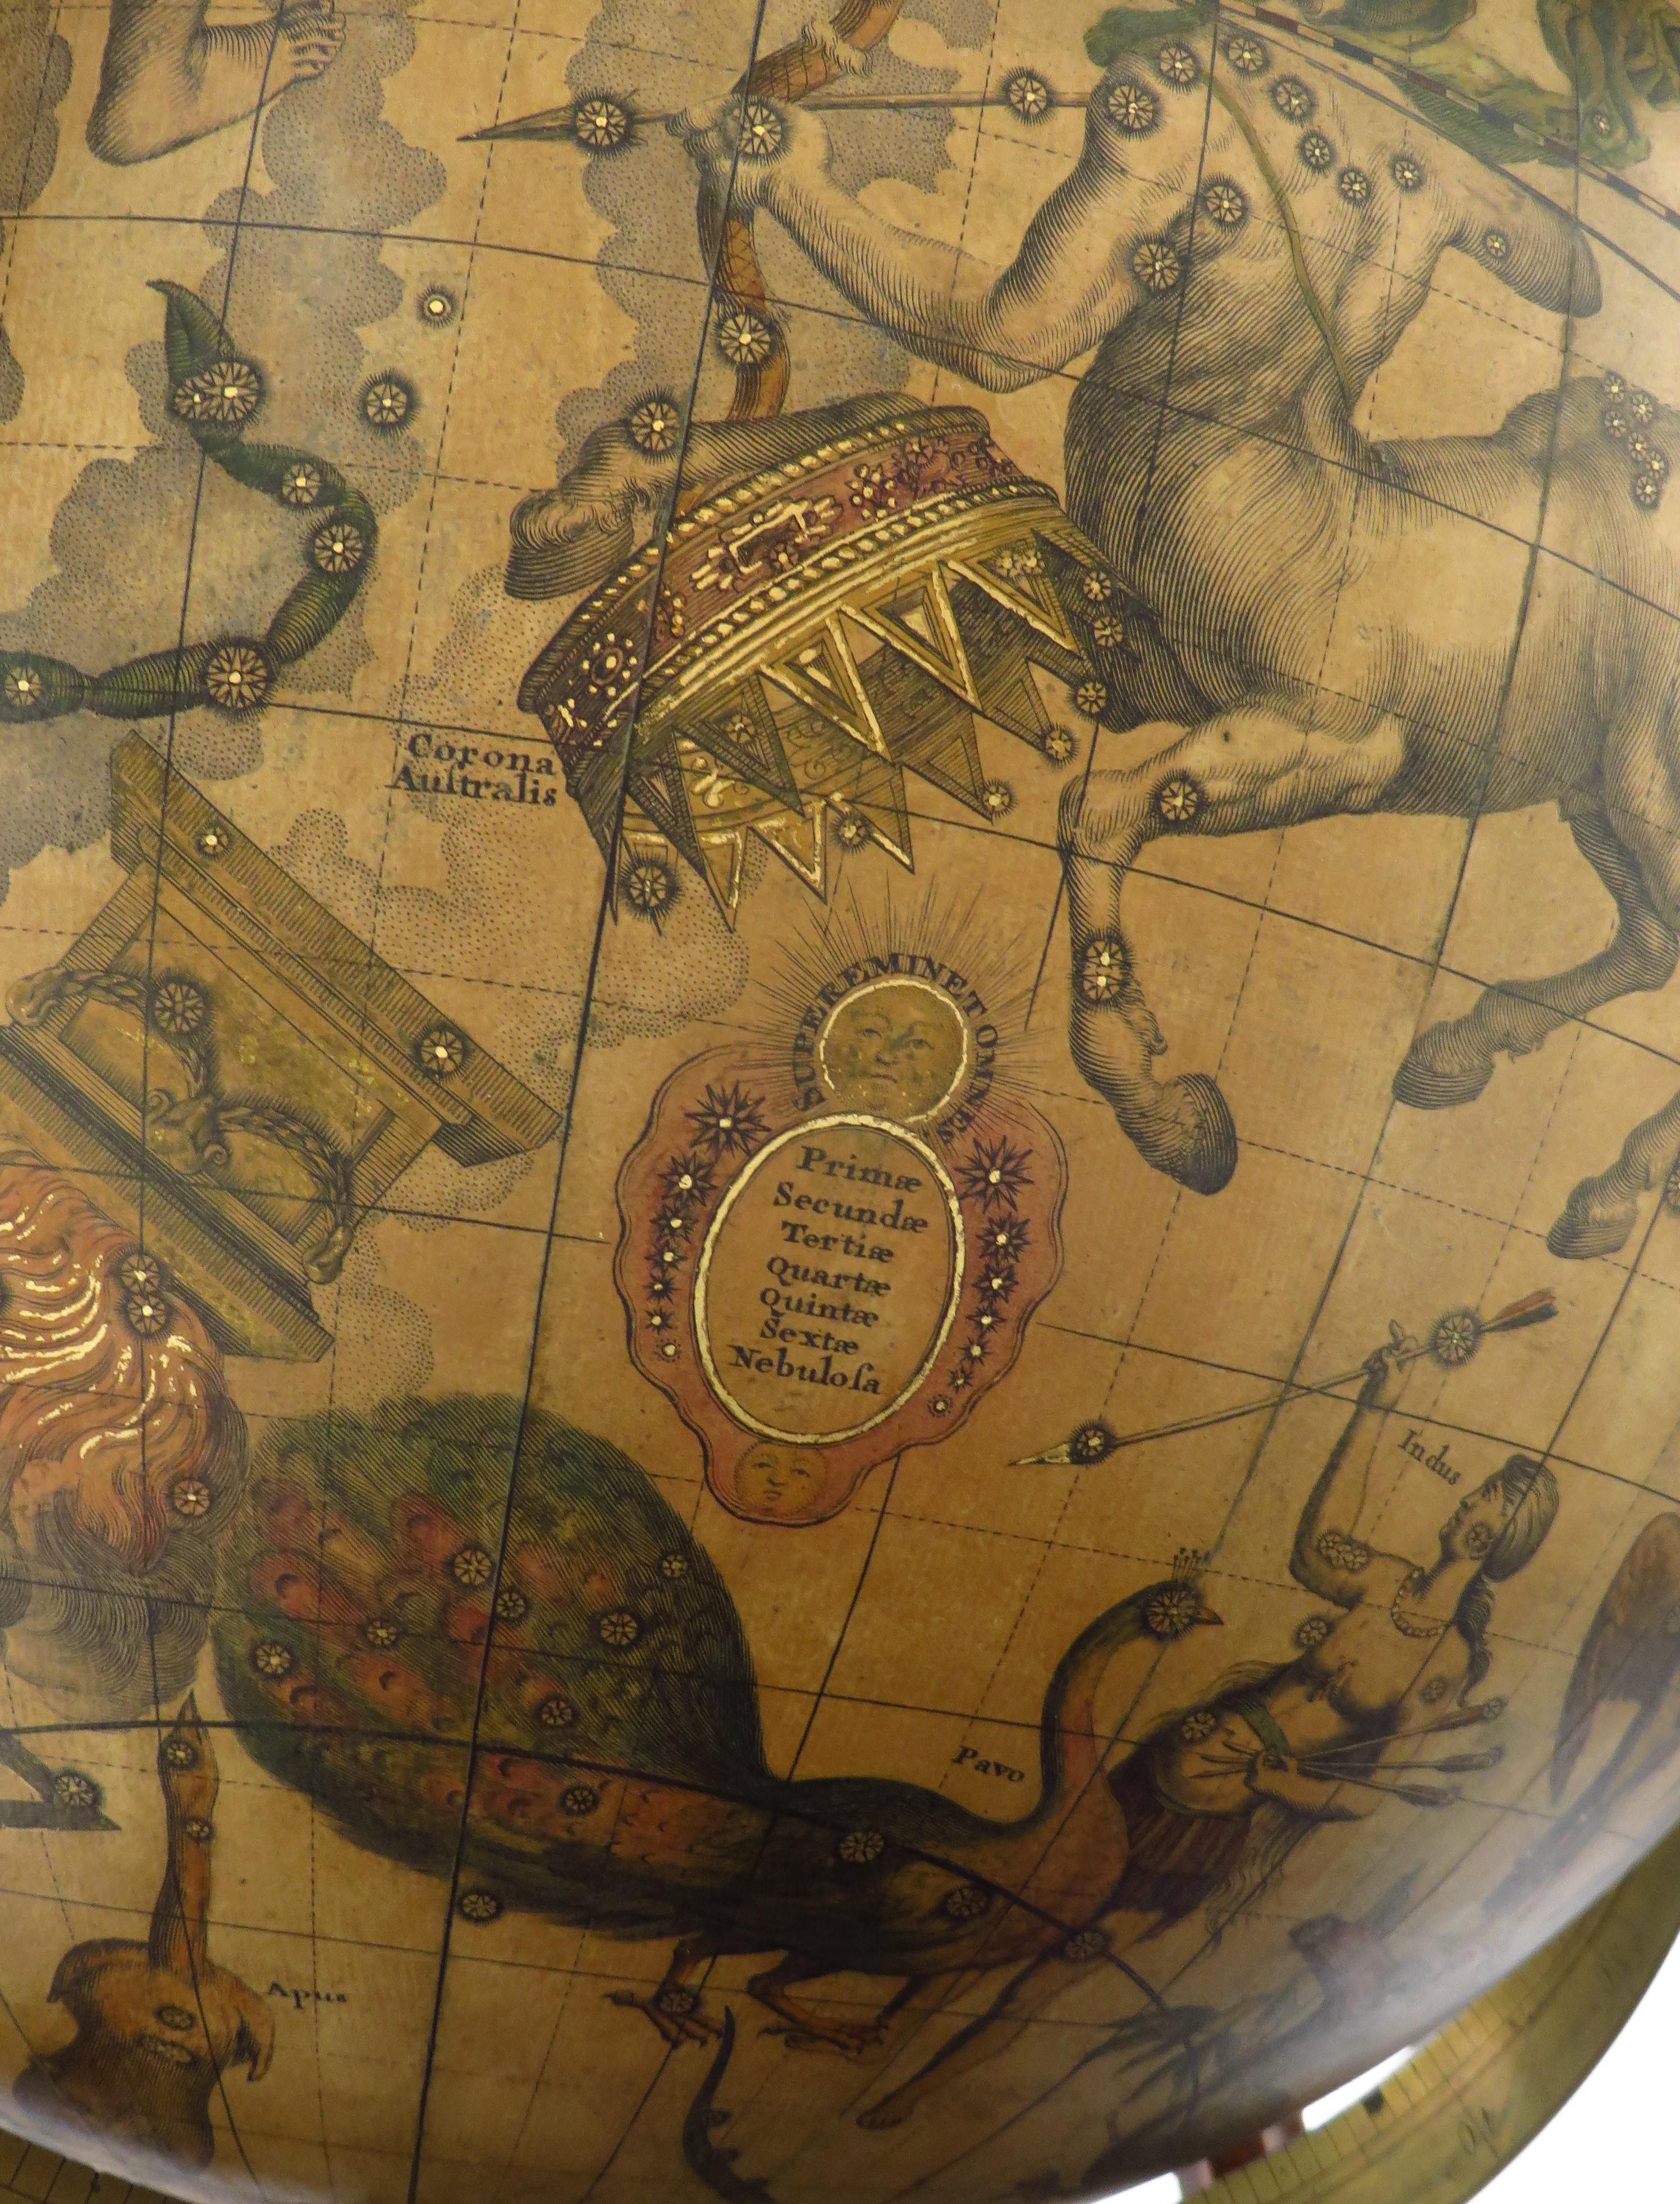 A beautiful Celestial Table Globe produced by Gerard & Leonard Valk For Sale 2